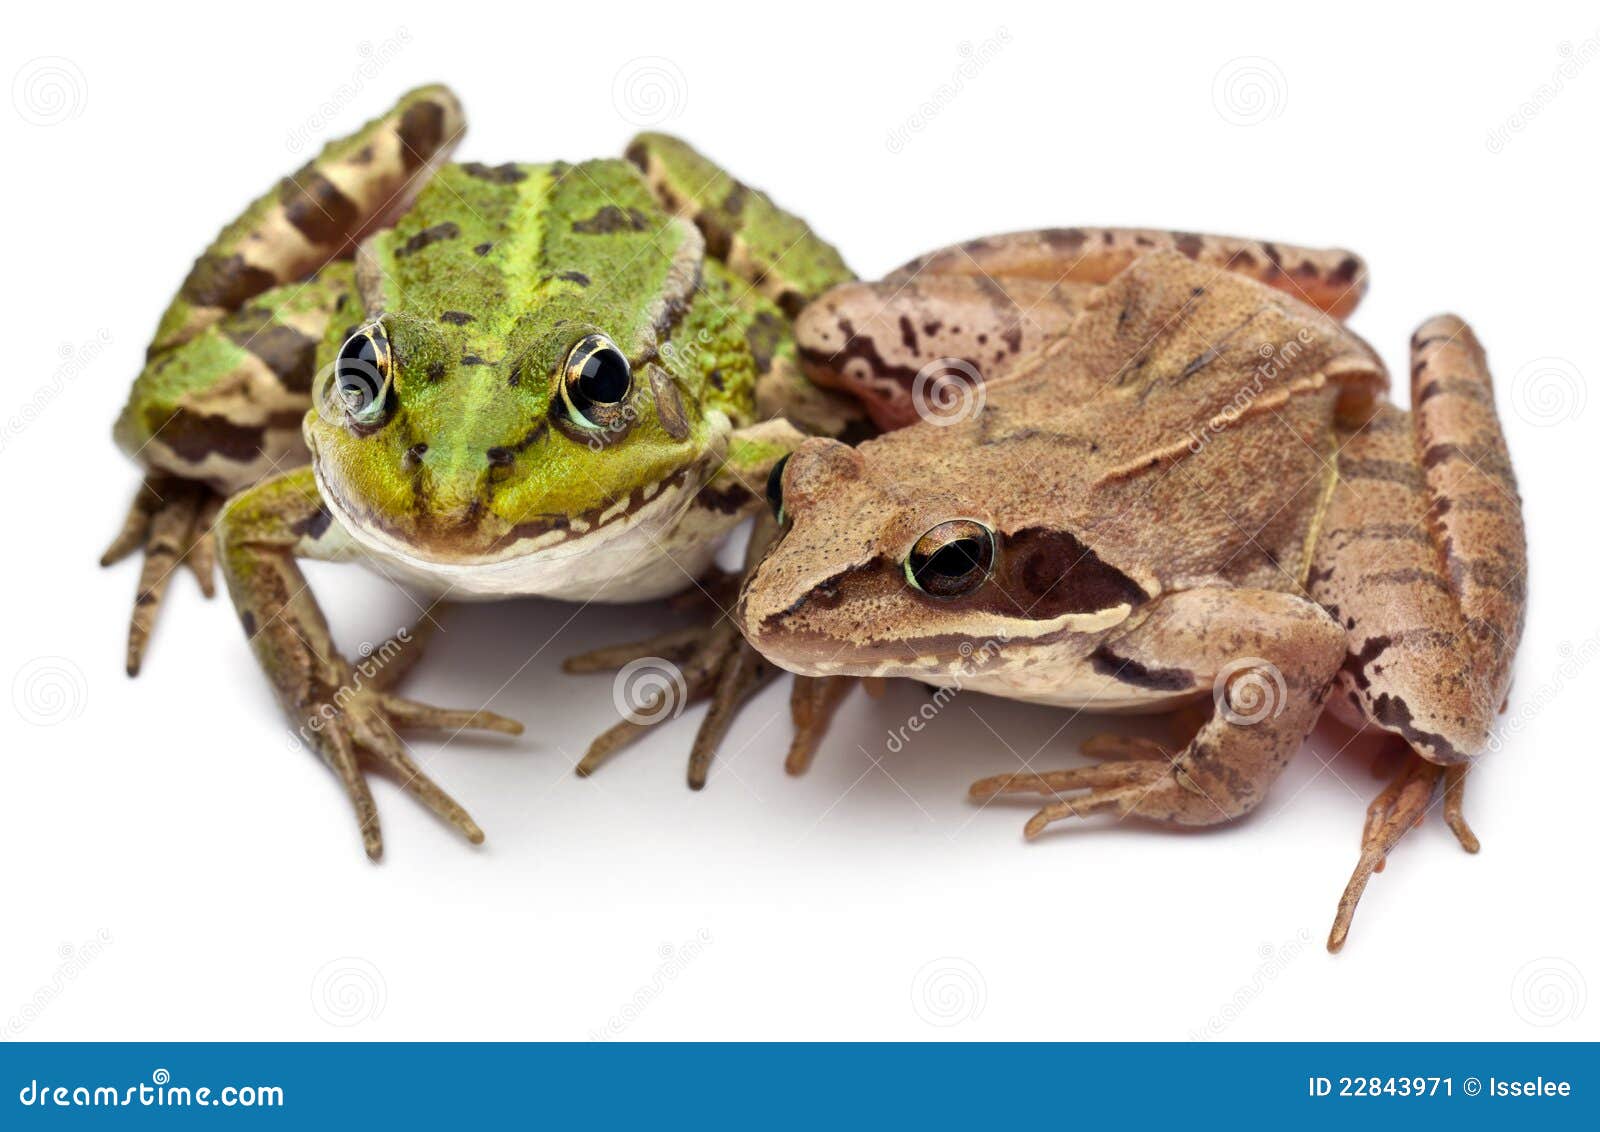 common european frog or edible frog, rana